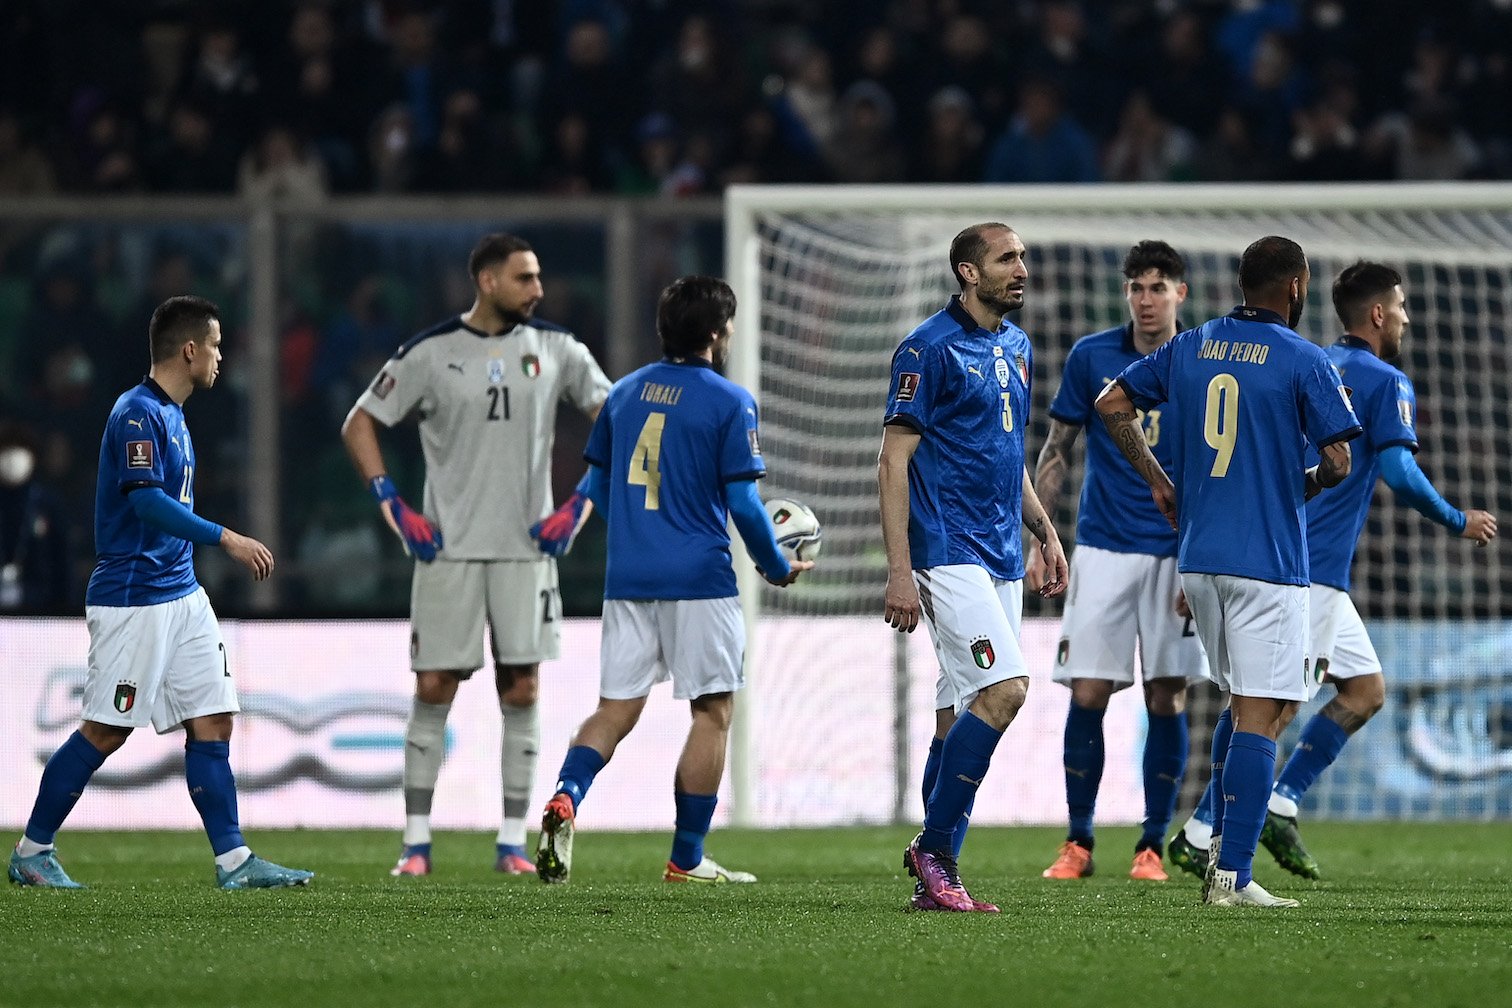 Rai, bagno-Mondiali: I diritti tv saranno ceduti dopo ko Italia? |  Sport e Vai